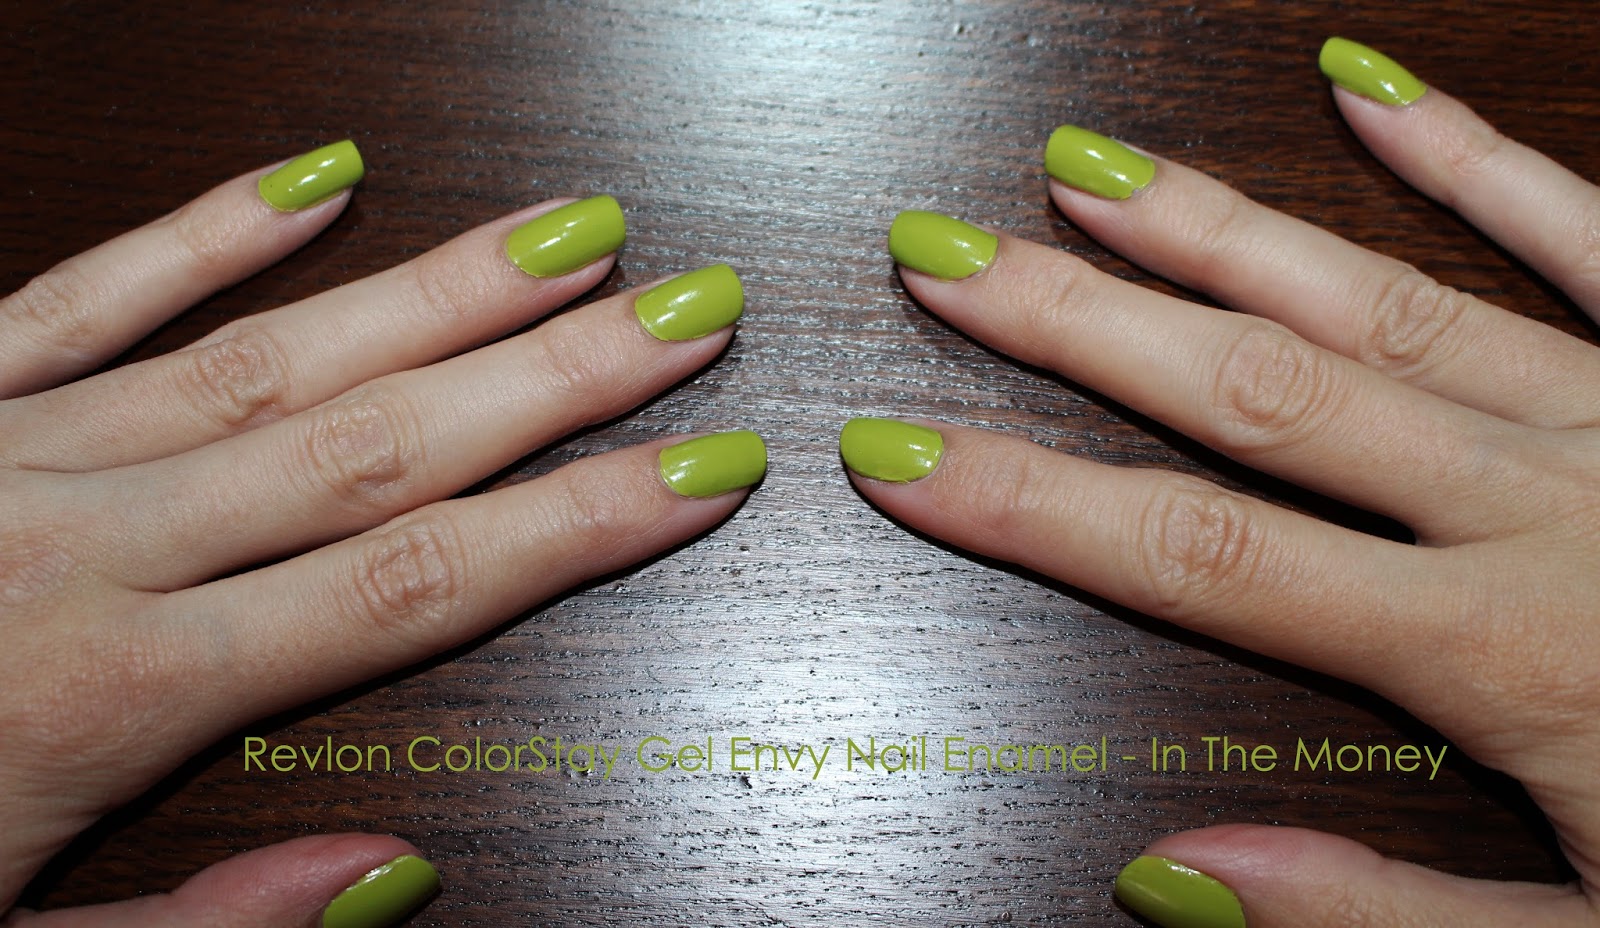 4. Revlon ColorStay Gel Envy Nail Polish - wide 3